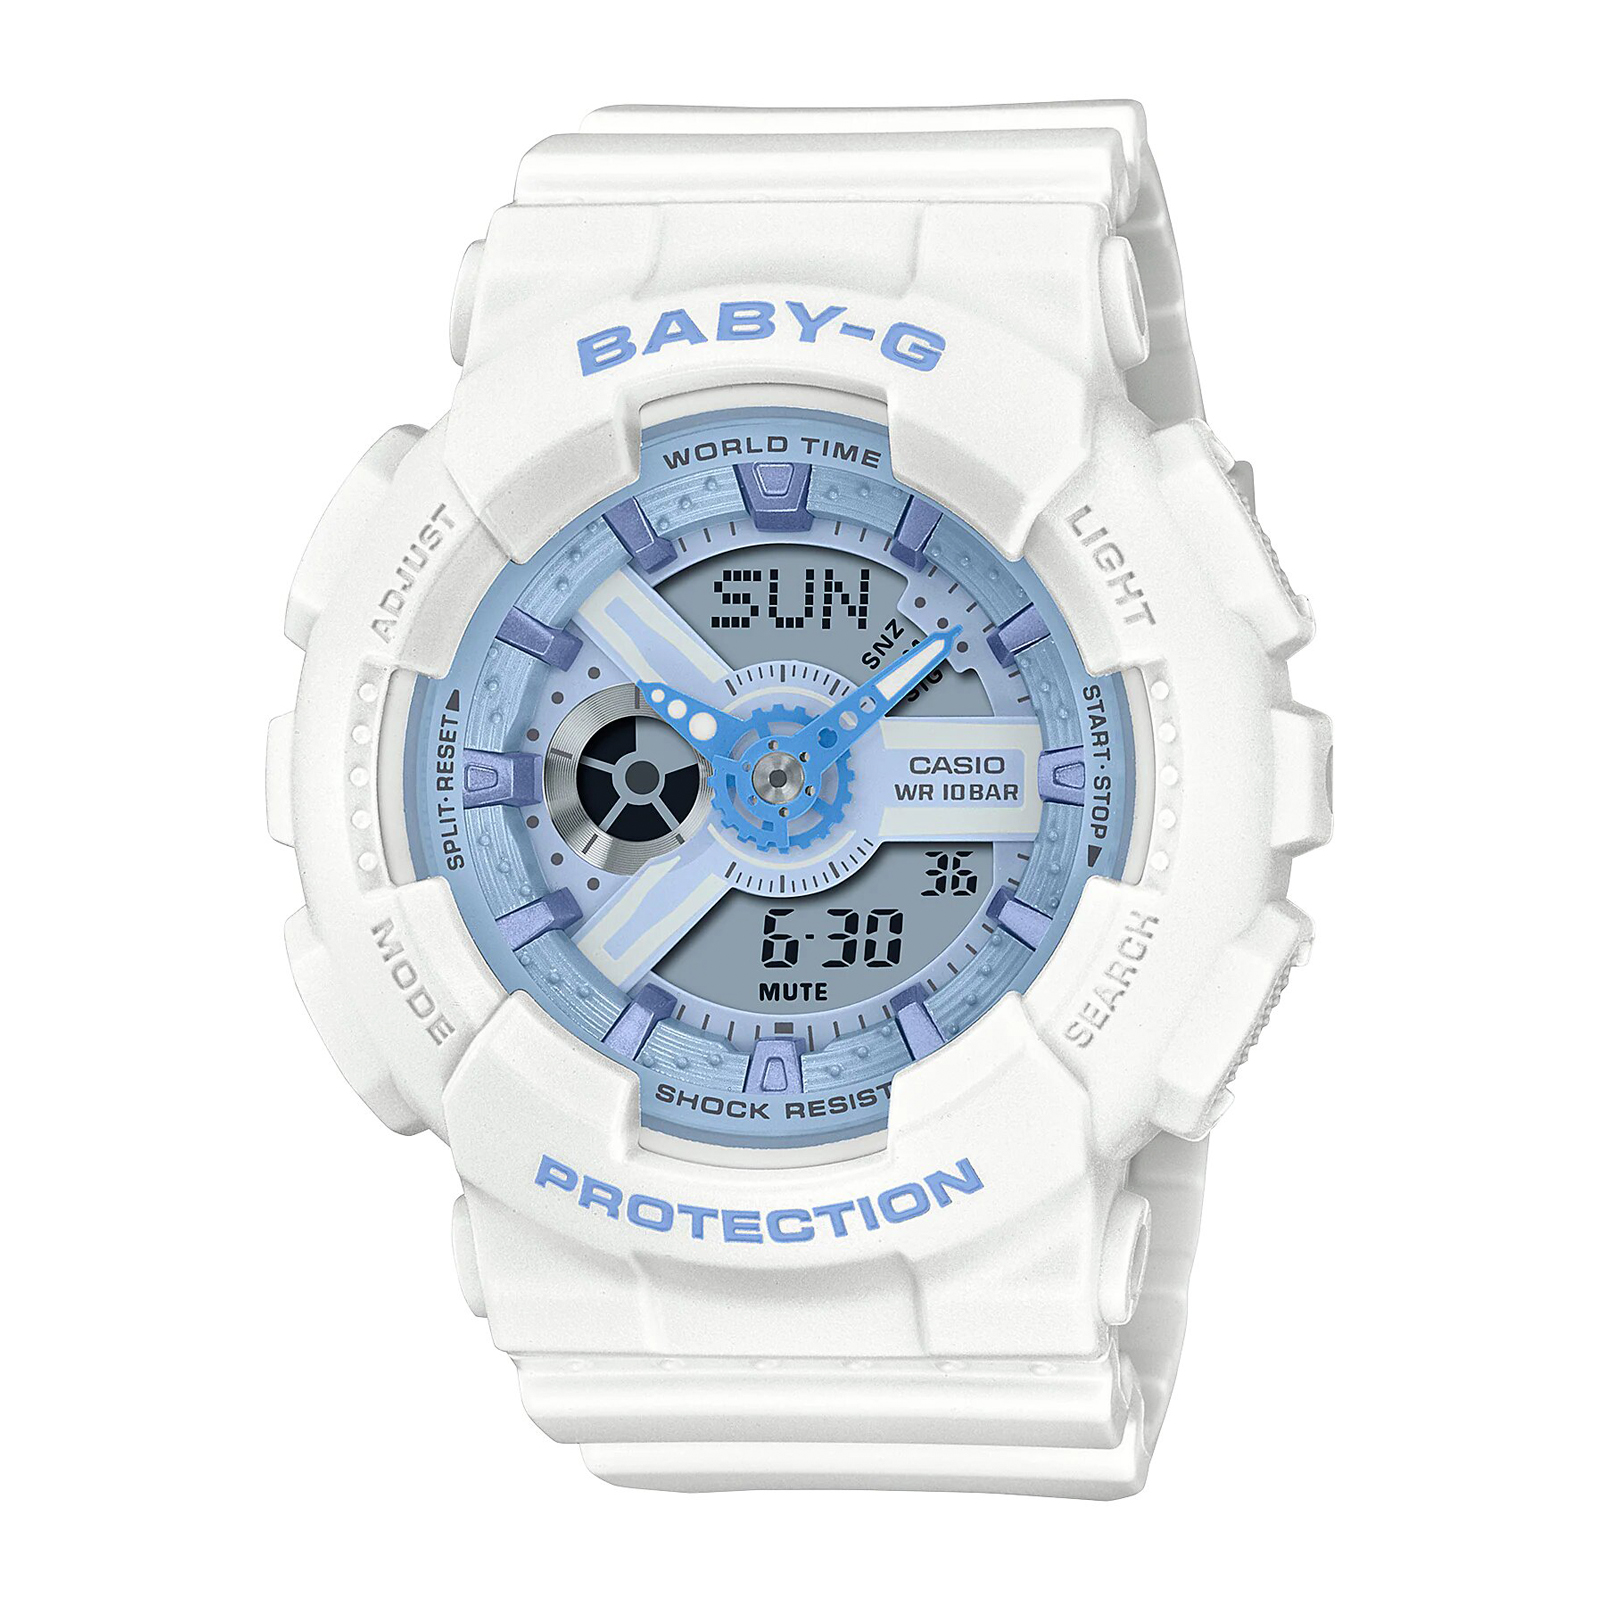 Reloj BABY-G BA-110XBE-7A Resina Mujer Blanco